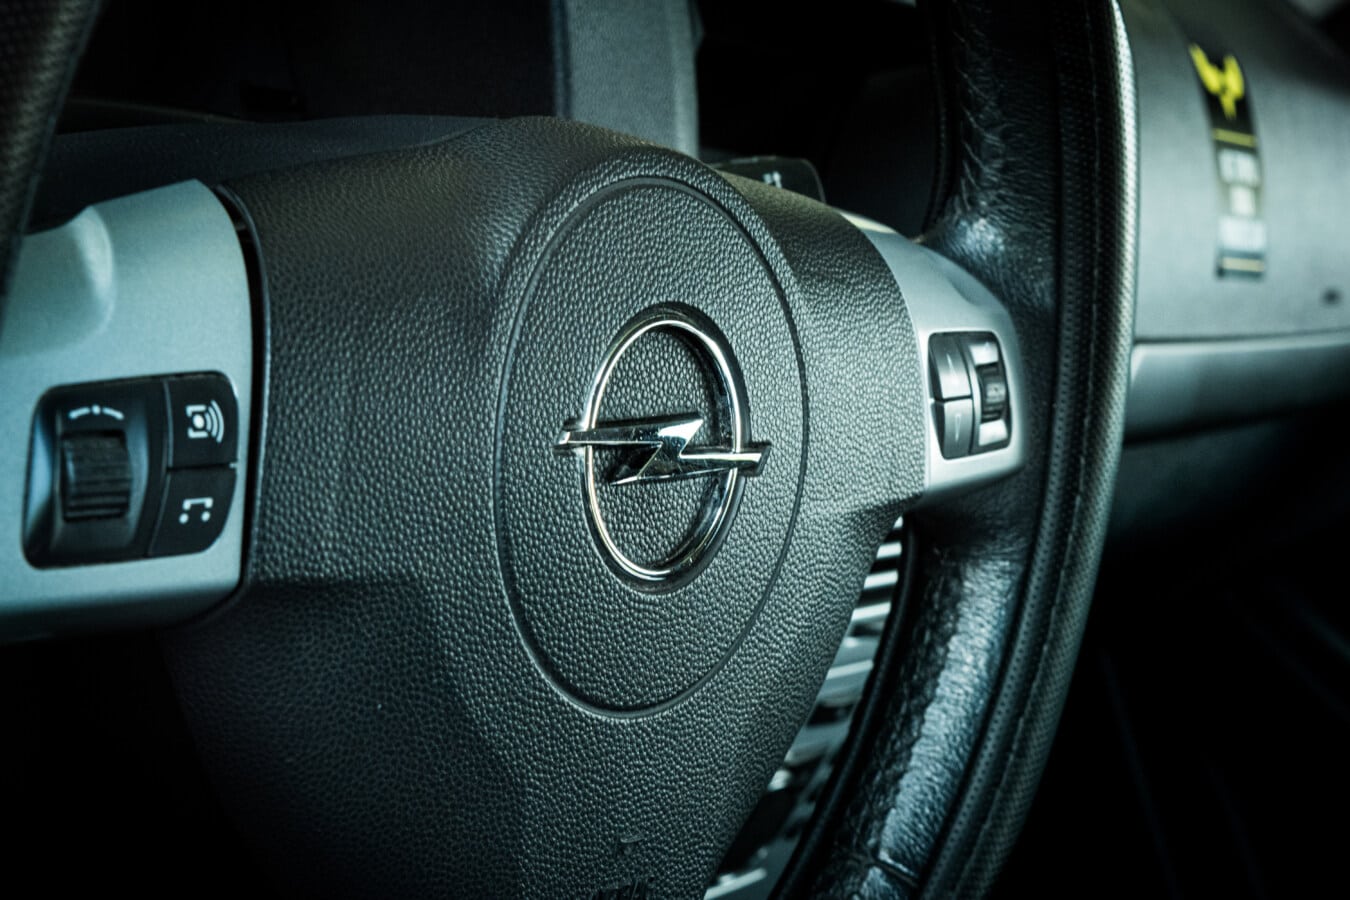 volante, airbags, painel de controle, carro, painel de controle, veículo, Dirigir, segurança, cromado, tecnologia